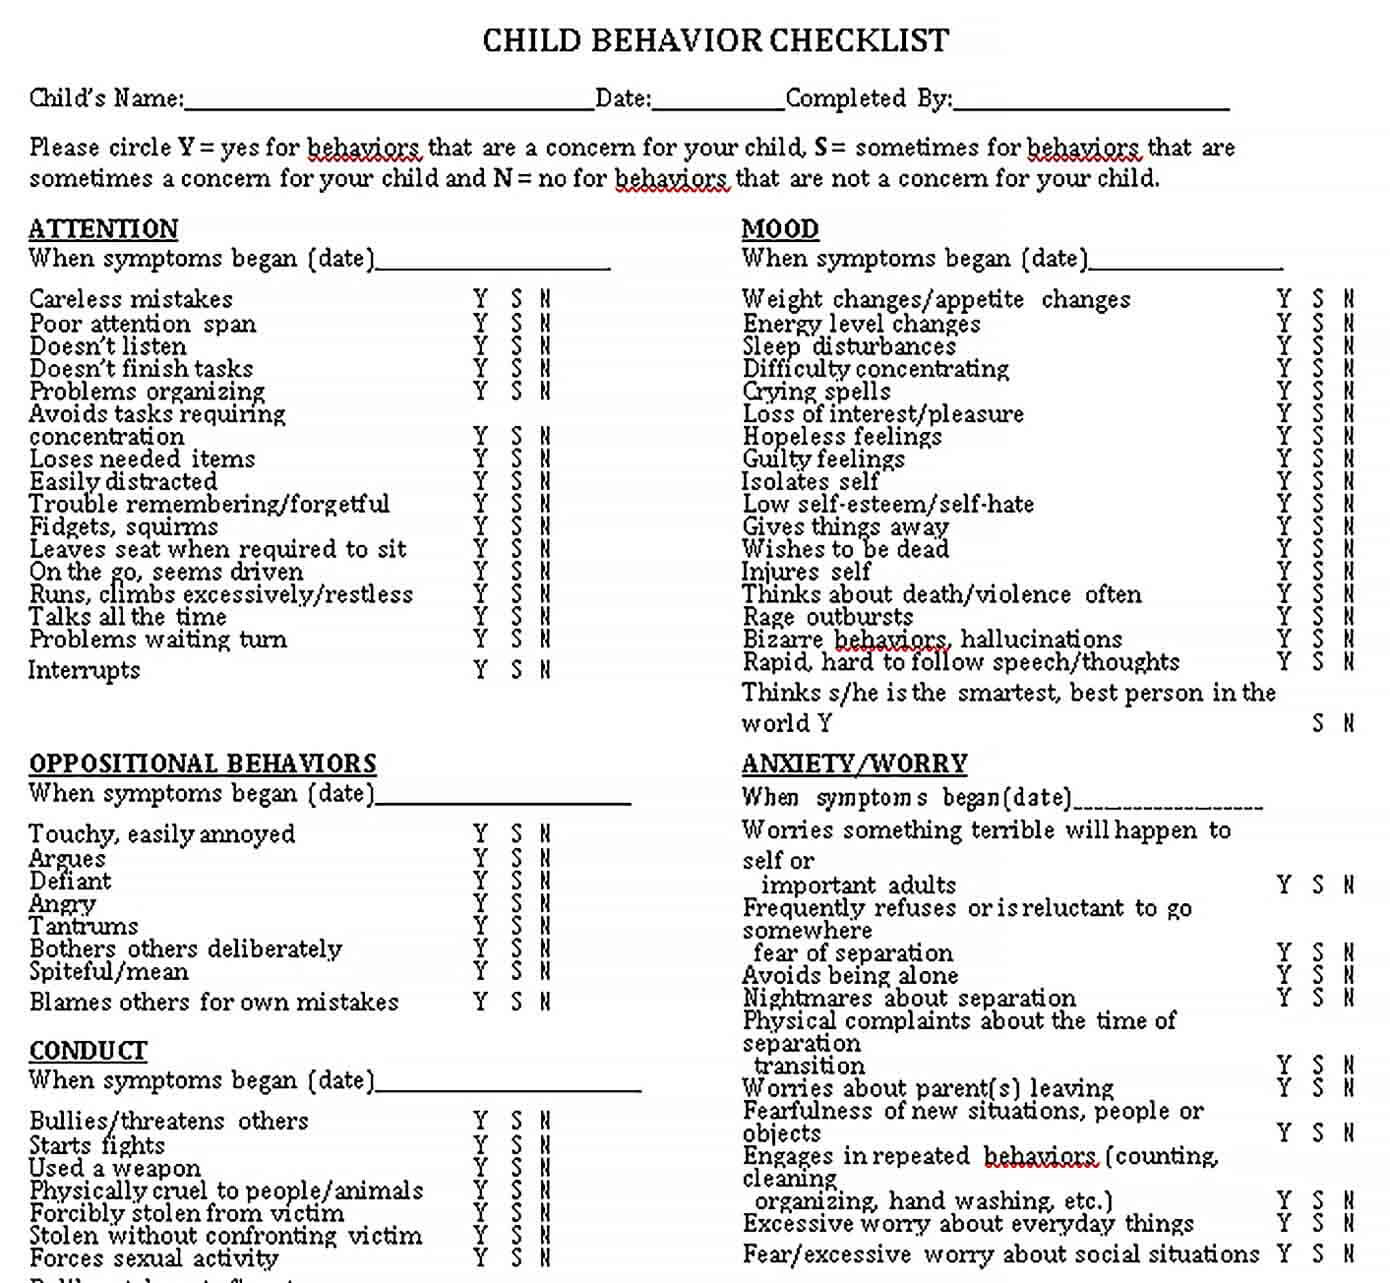 Sample Child Behavior Checklist for School